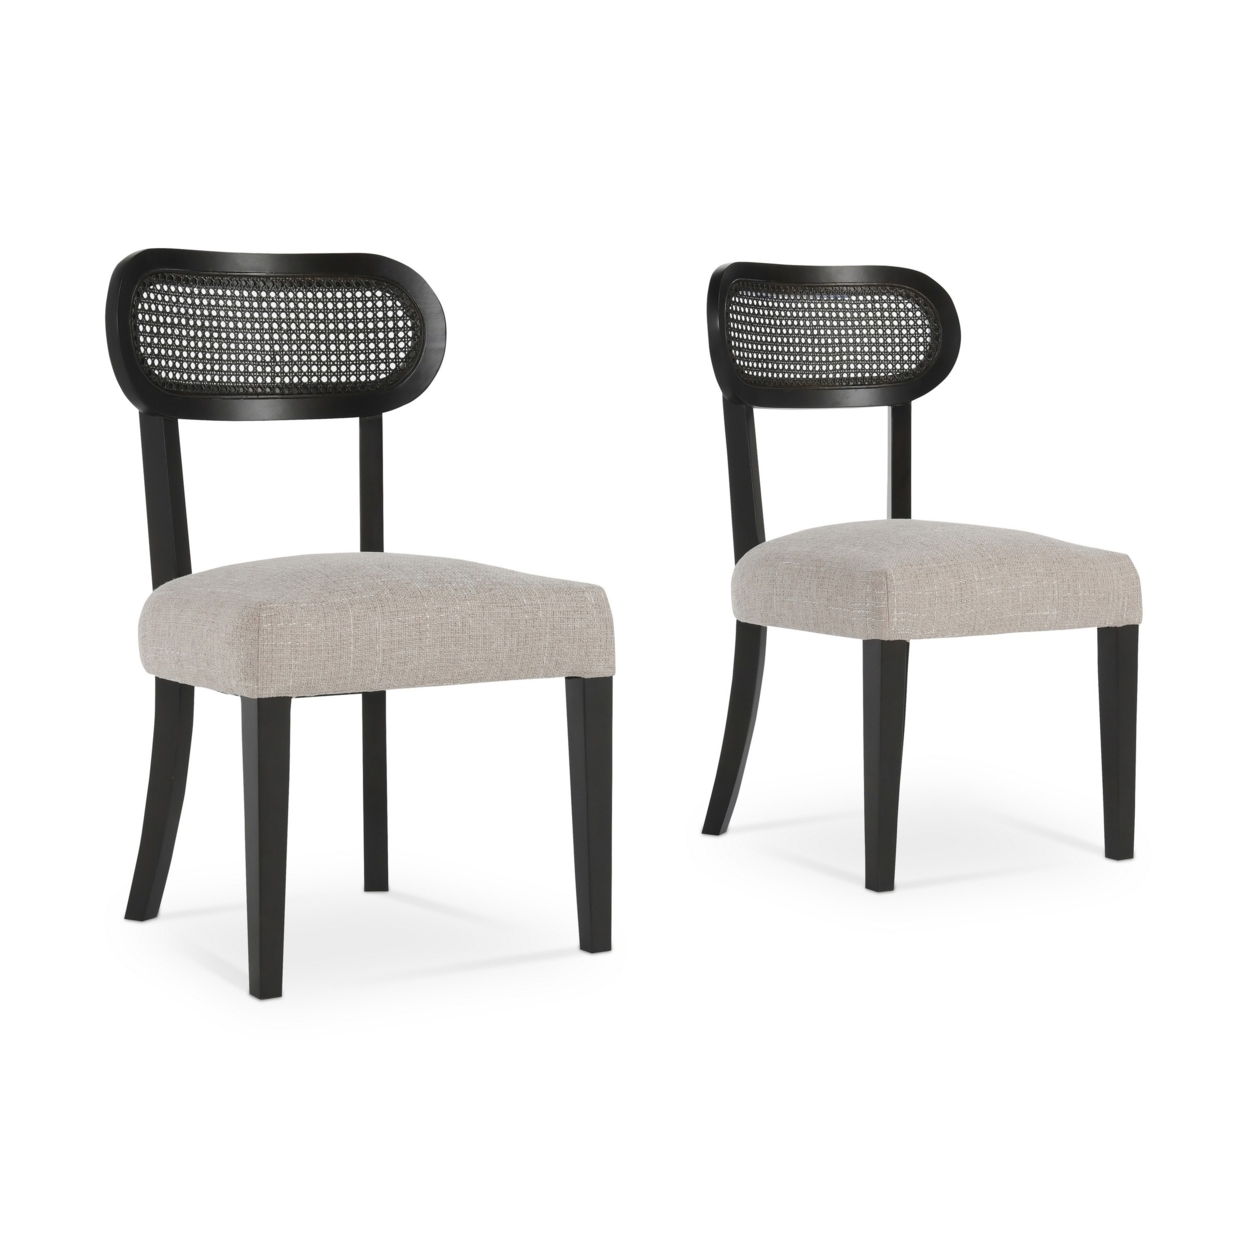 20 Inch Dining Chairs, Rattan Back, Set Of 2, Wood Grains, Black, Gray- Saltoro Sherpi